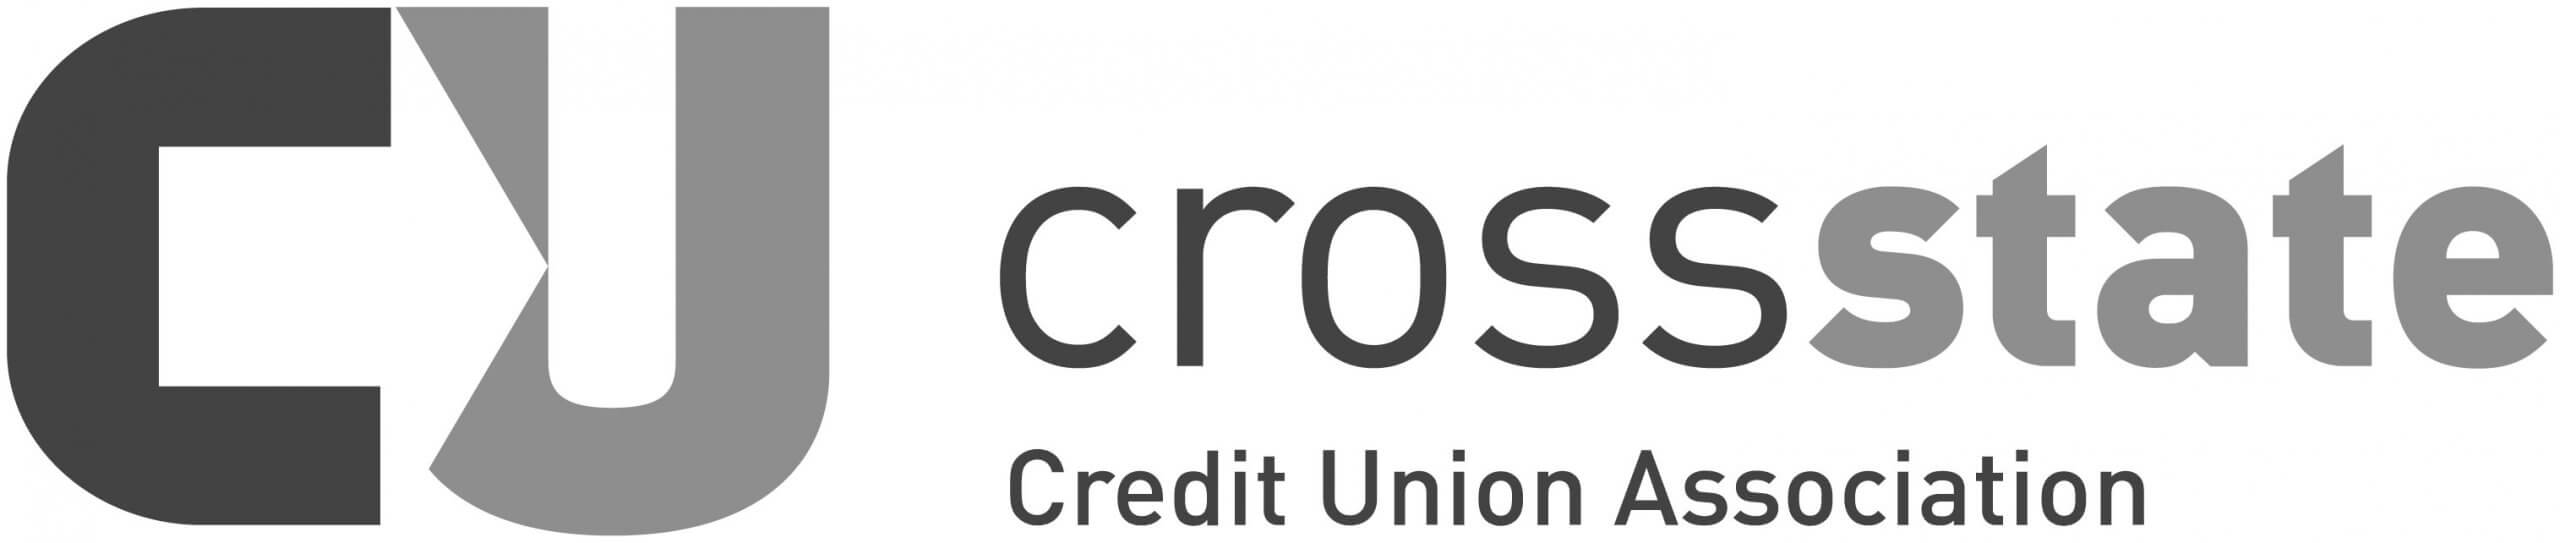 crossState-logo-horizontal